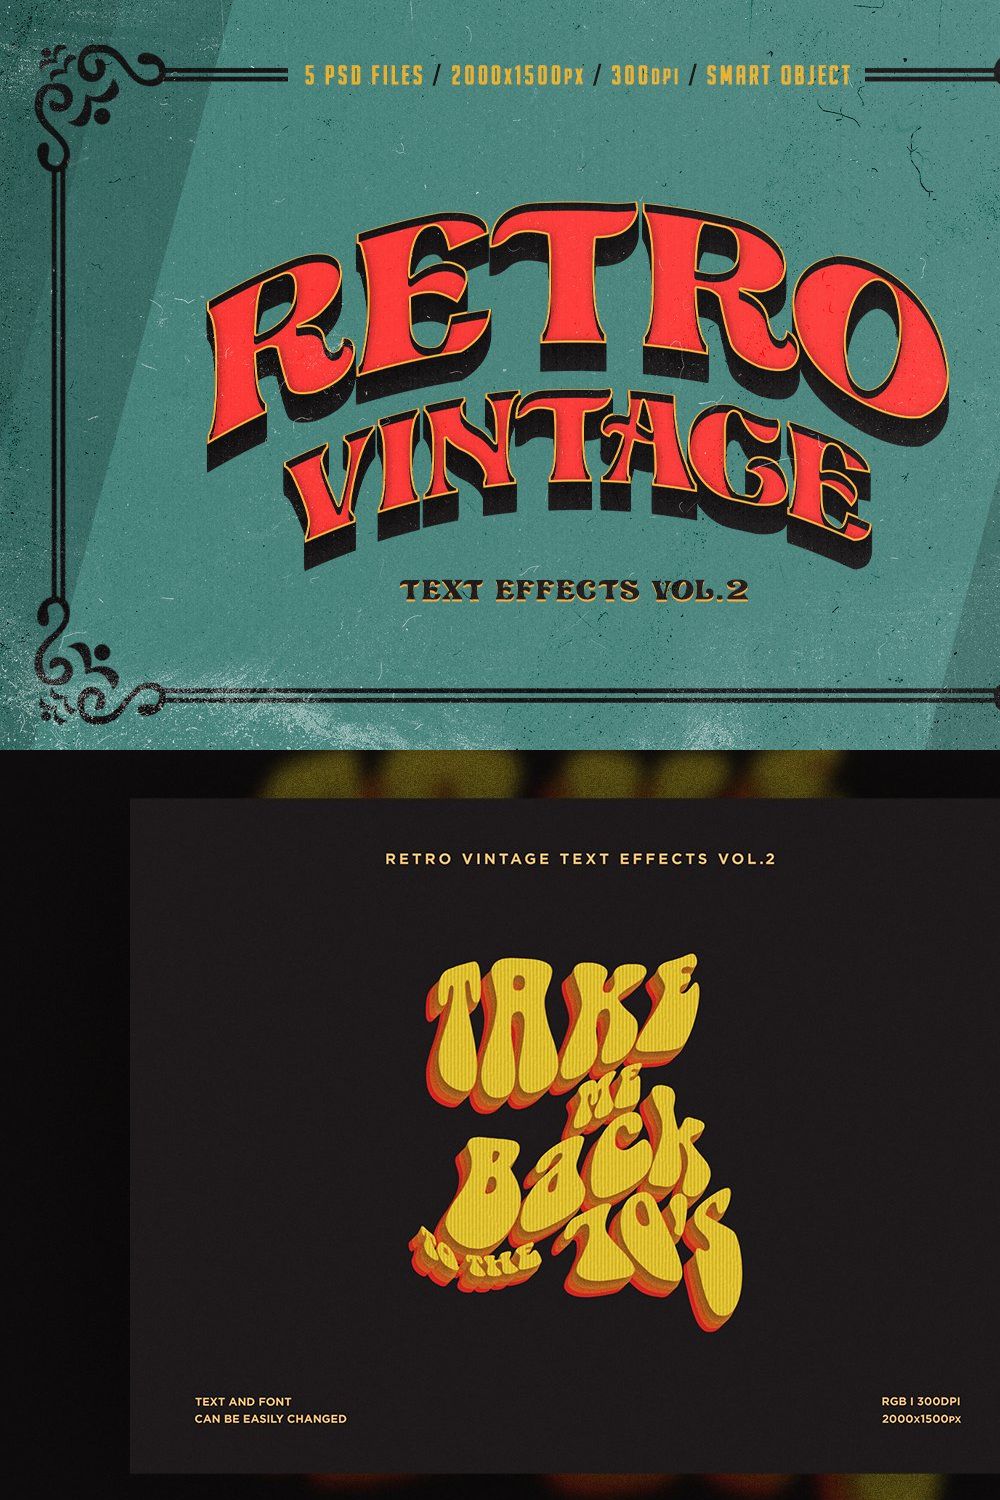 Retro Vintage Text Effects Vol.2 pinterest preview image.